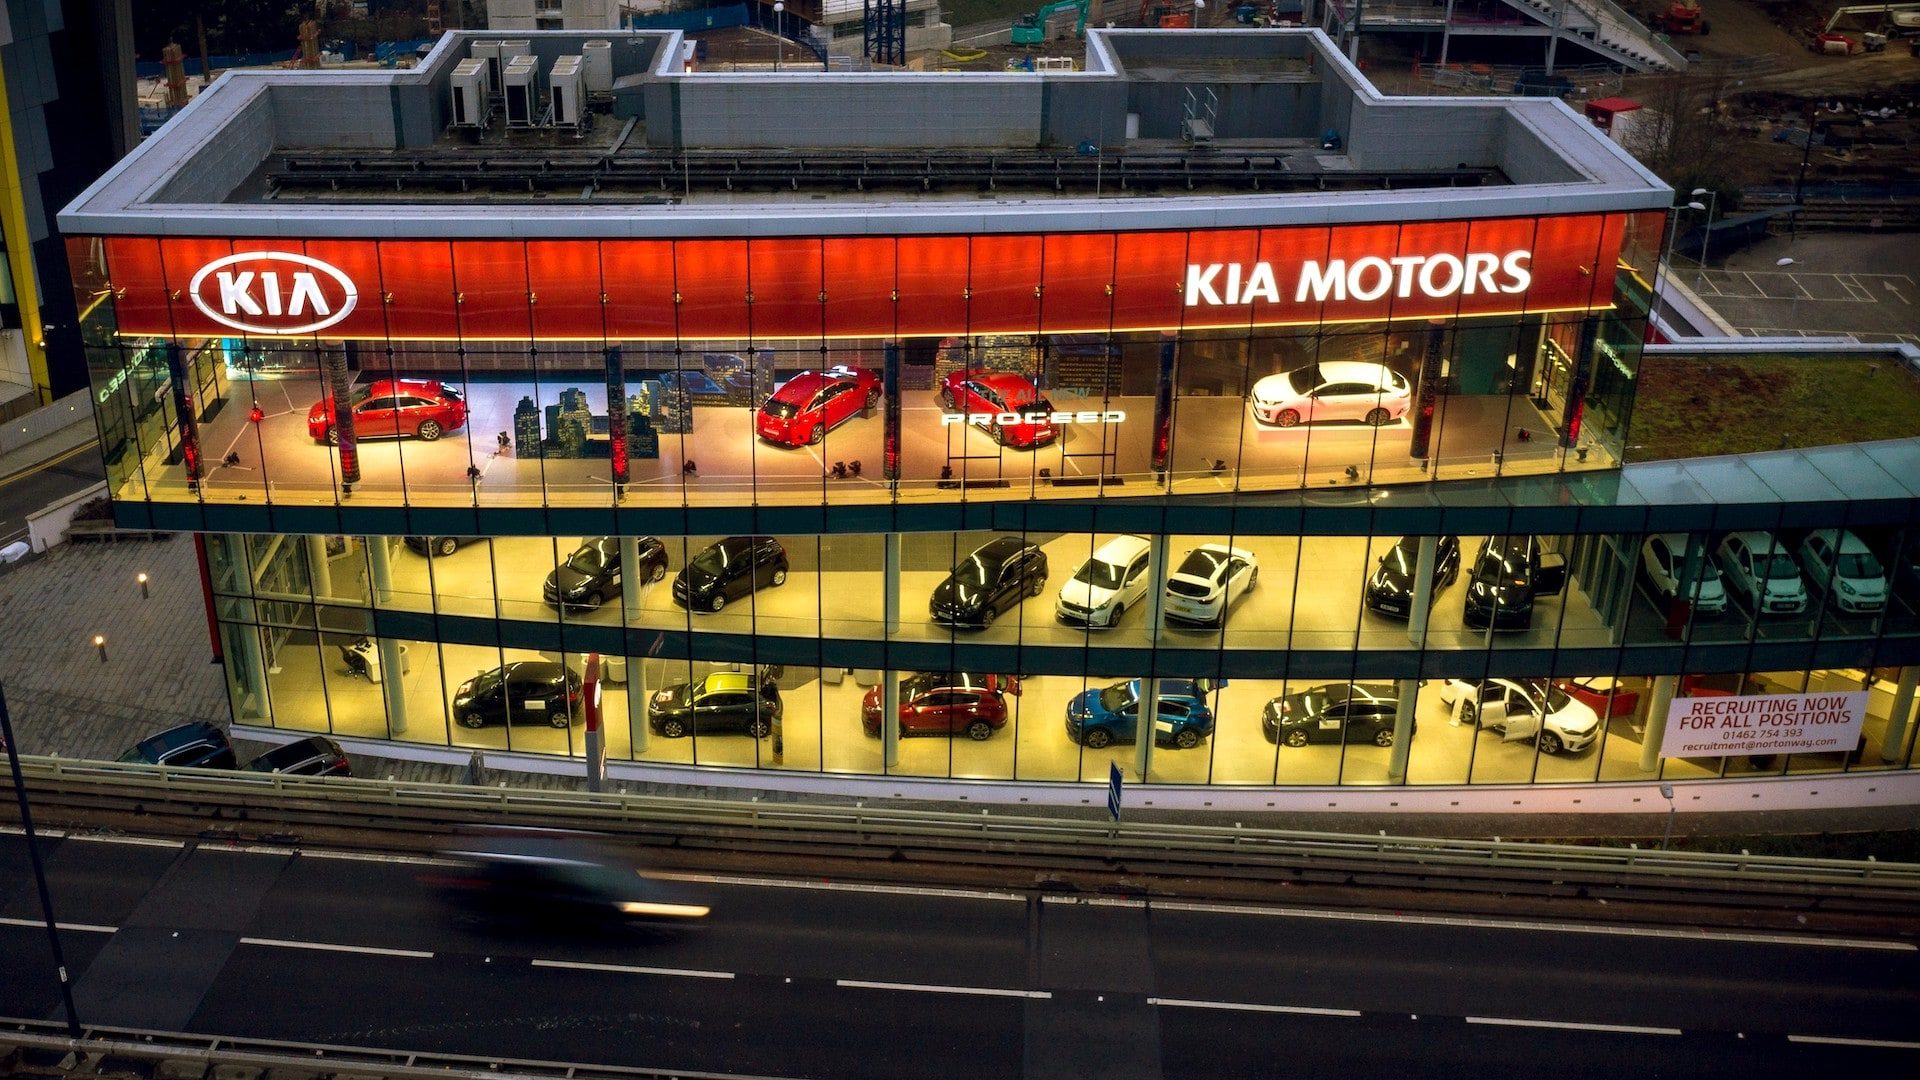 Kia voted best by UK dealerships